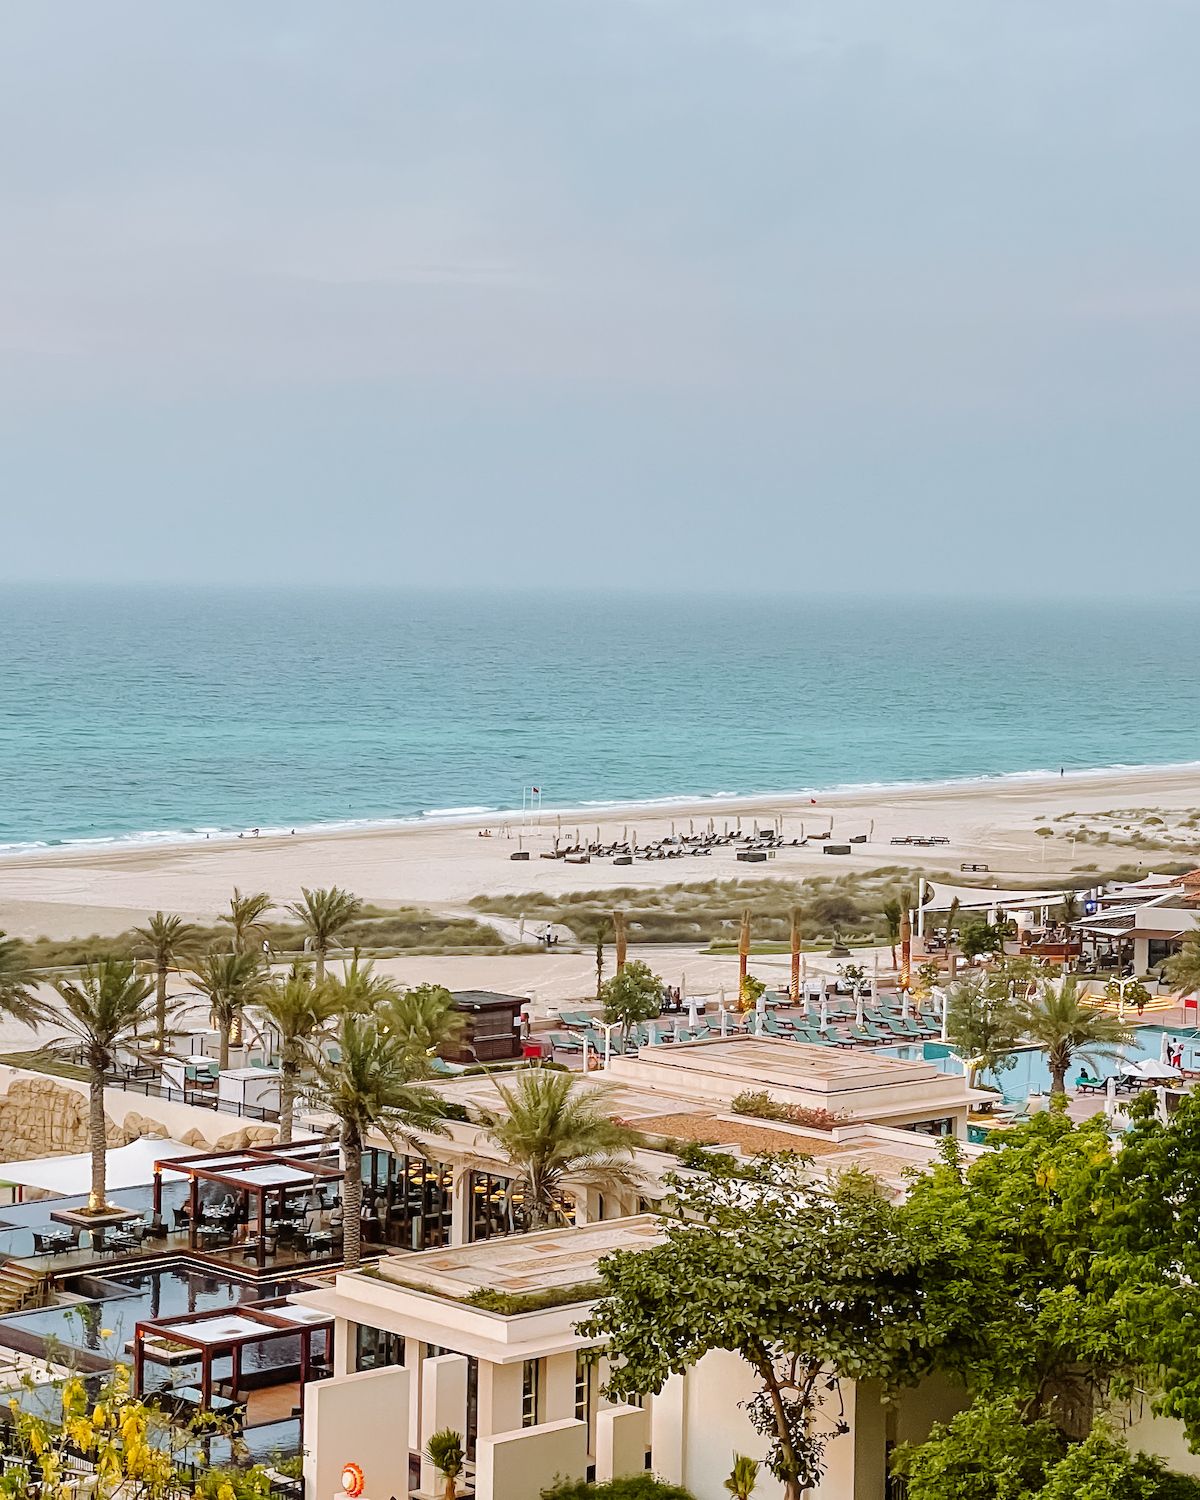 St. Regis Saadiyat Island Resort pool amenities overlooking the sea